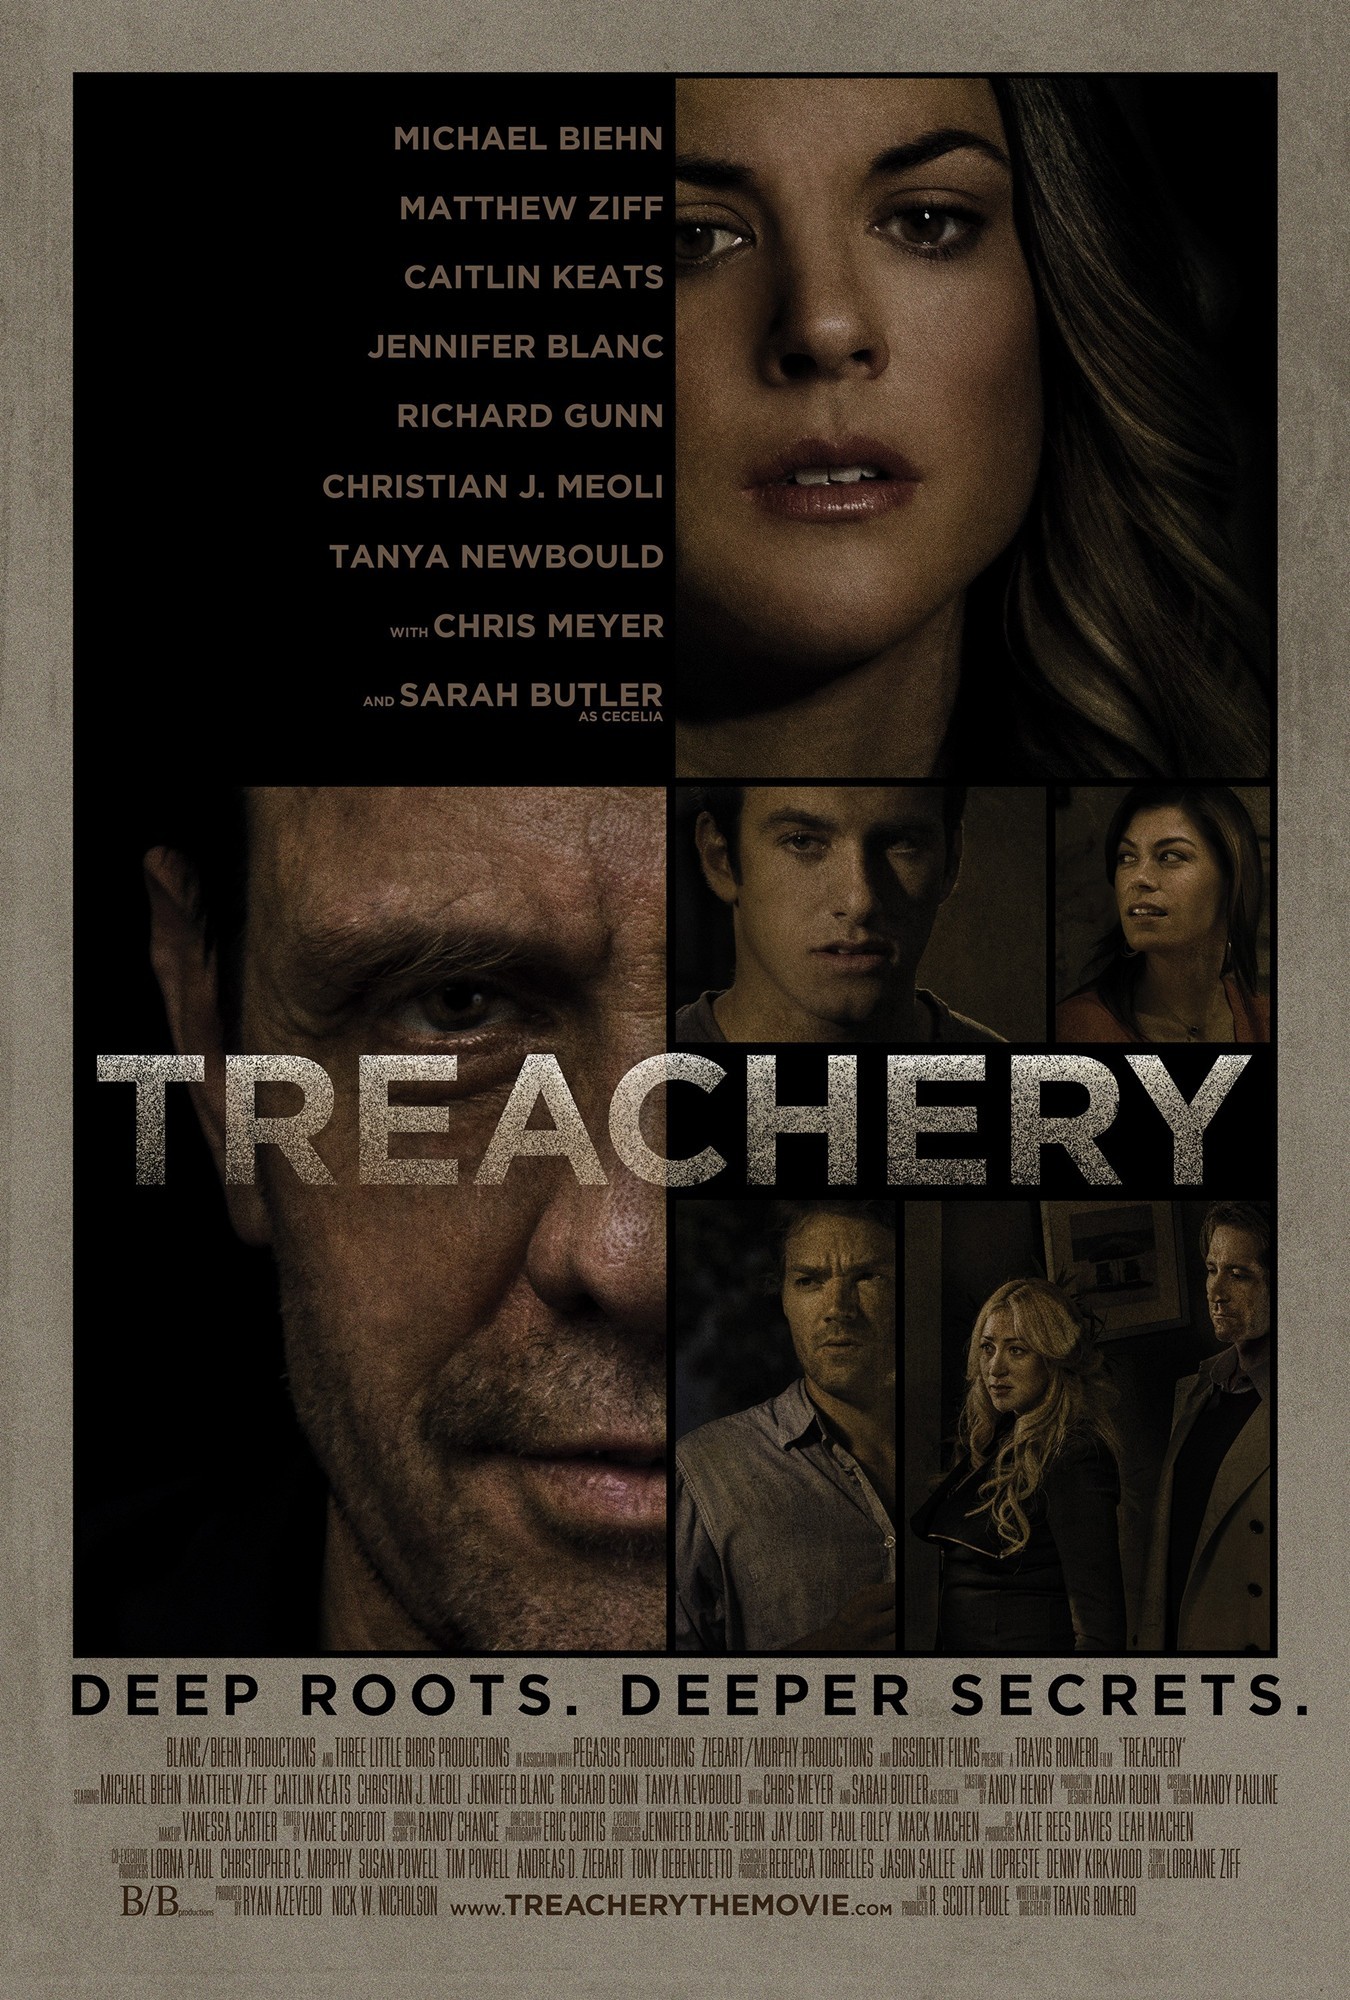 treachery-poster-1a